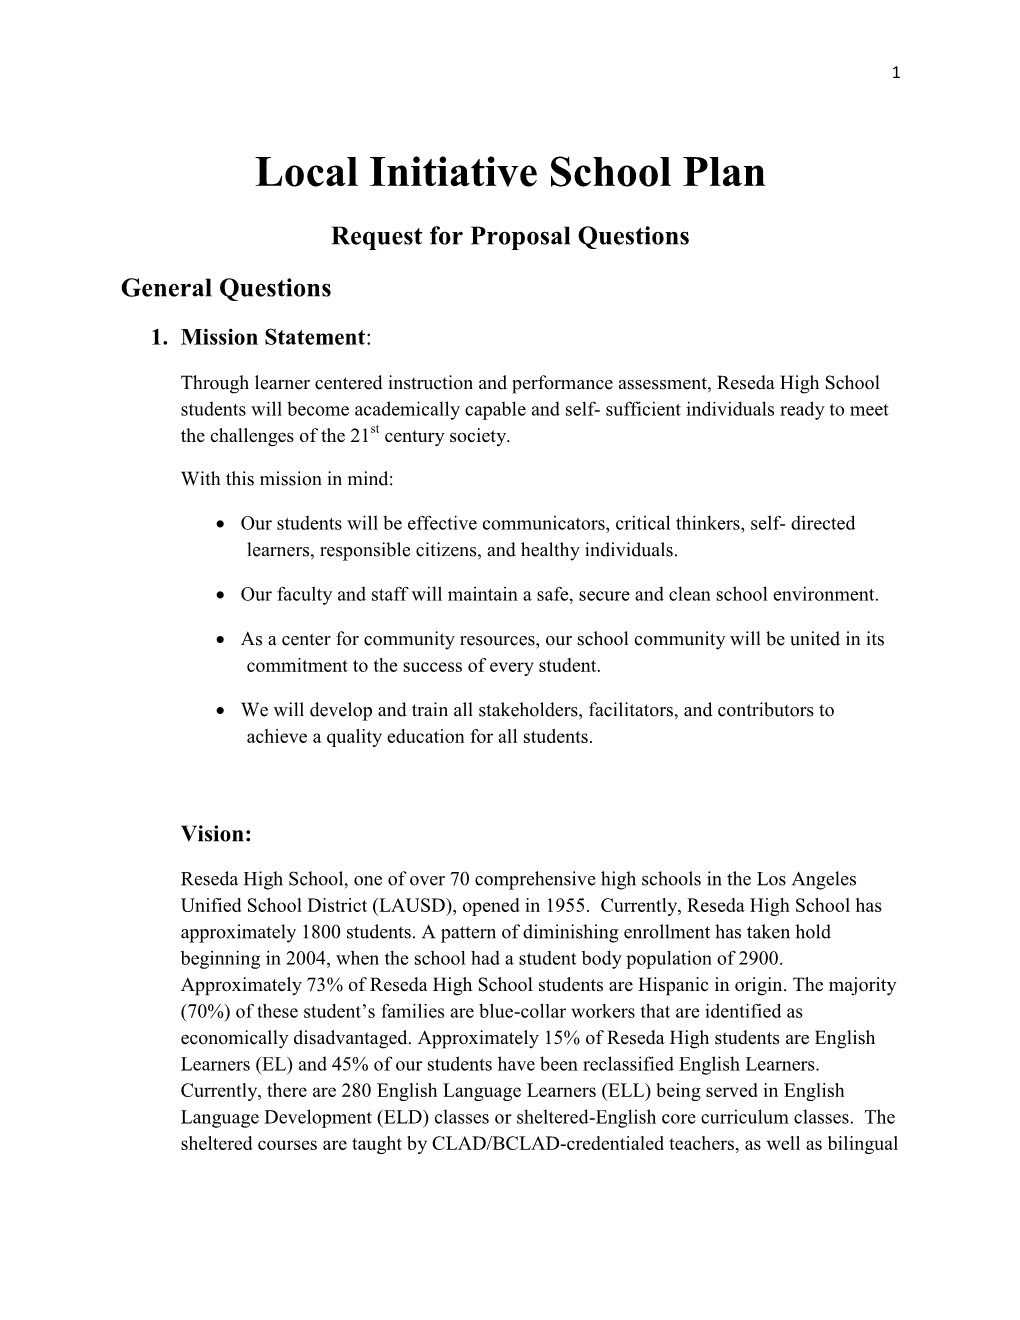 Local Initiative School Plan